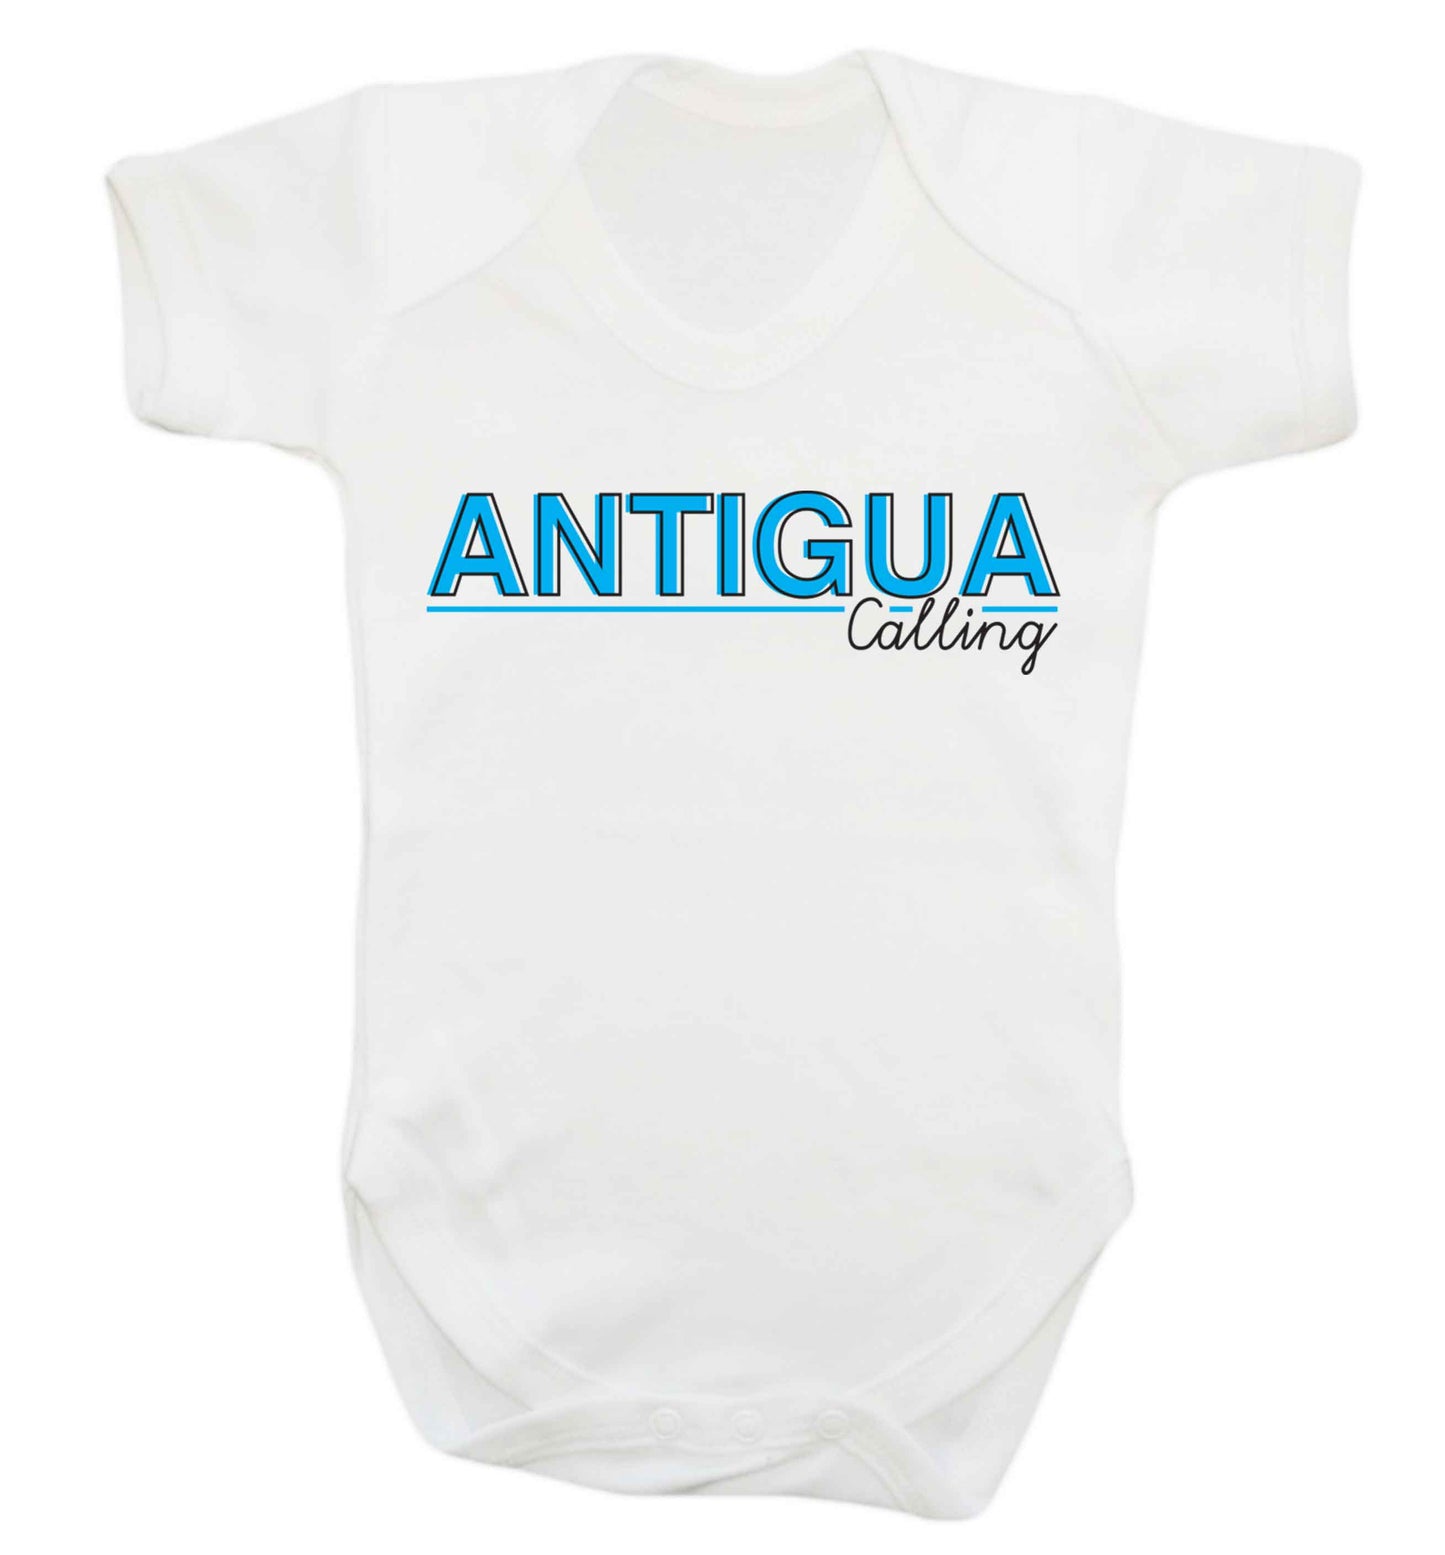 Antigua calling Baby Vest white 18-24 months